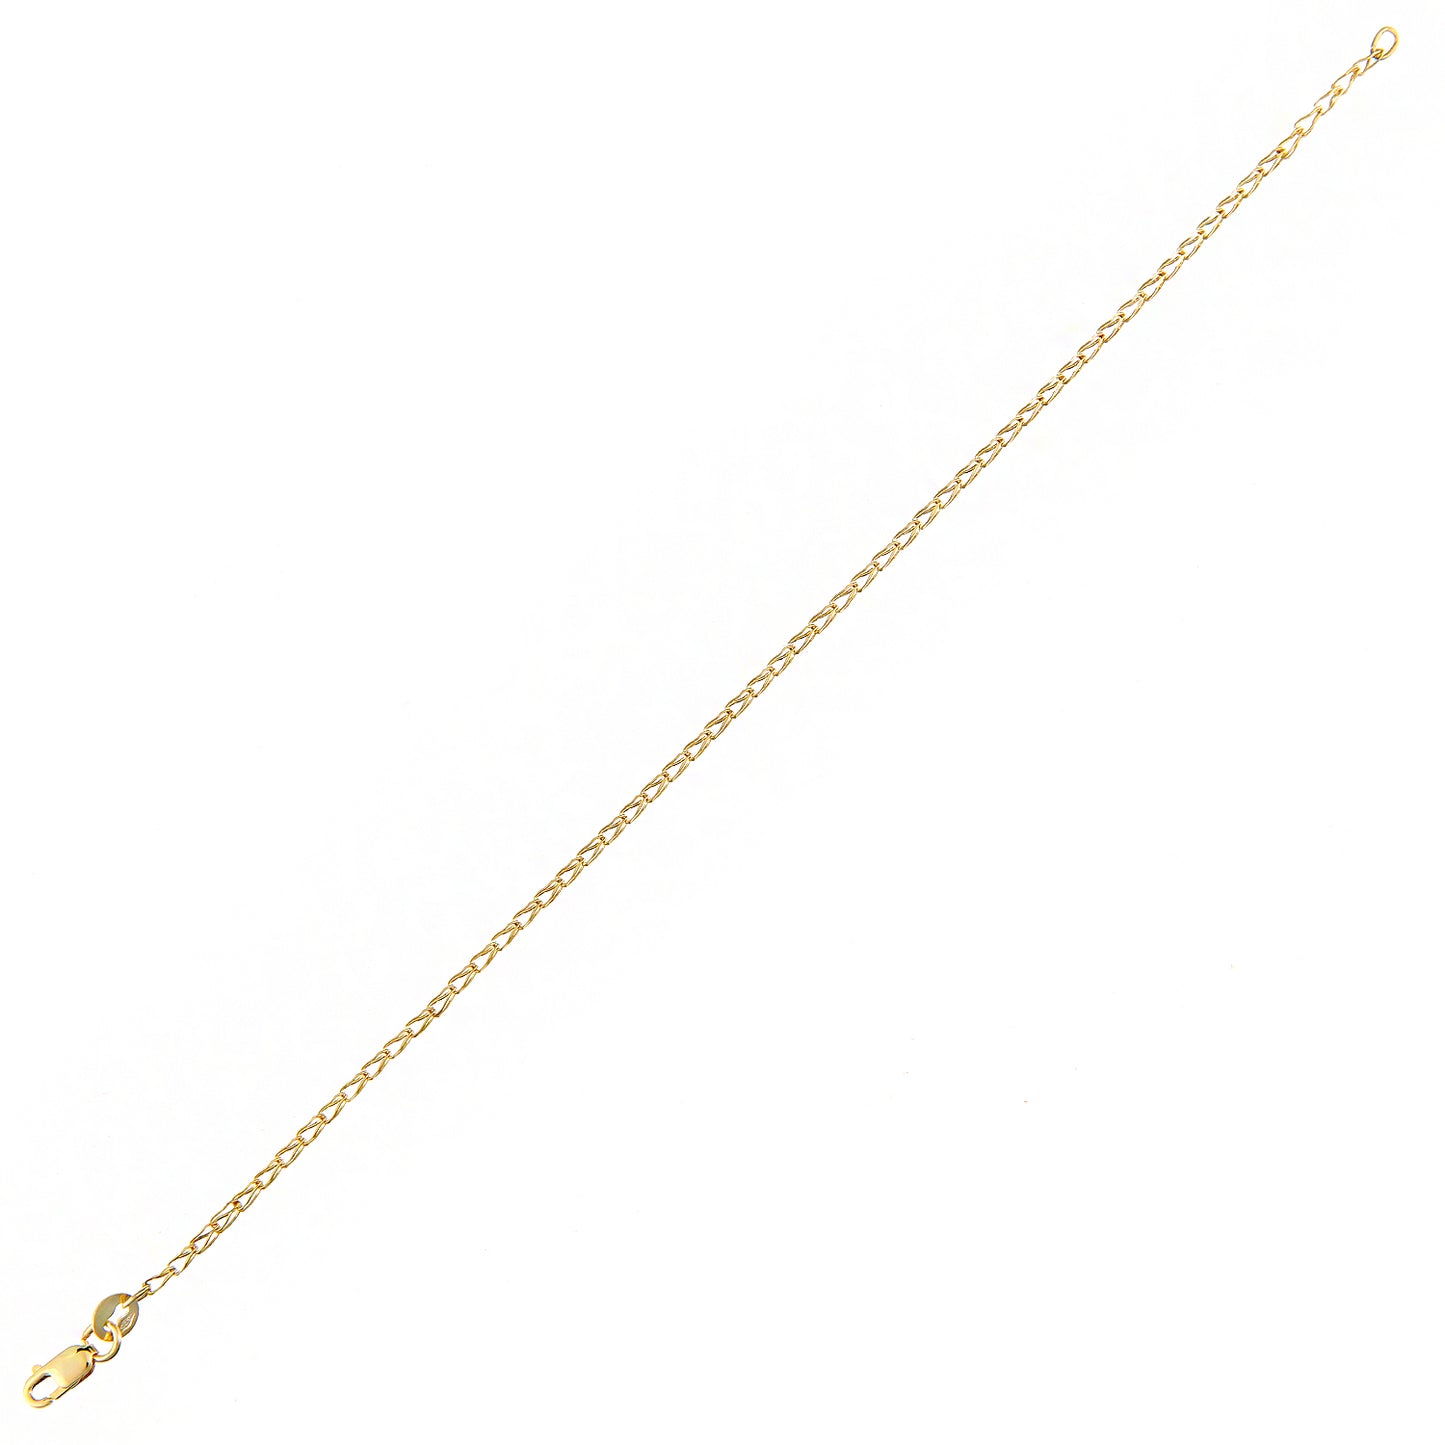 9ct Gold  Oval Tulip Belcher Chain Bracelet 7.5 inch - SPDAXL70-7.5